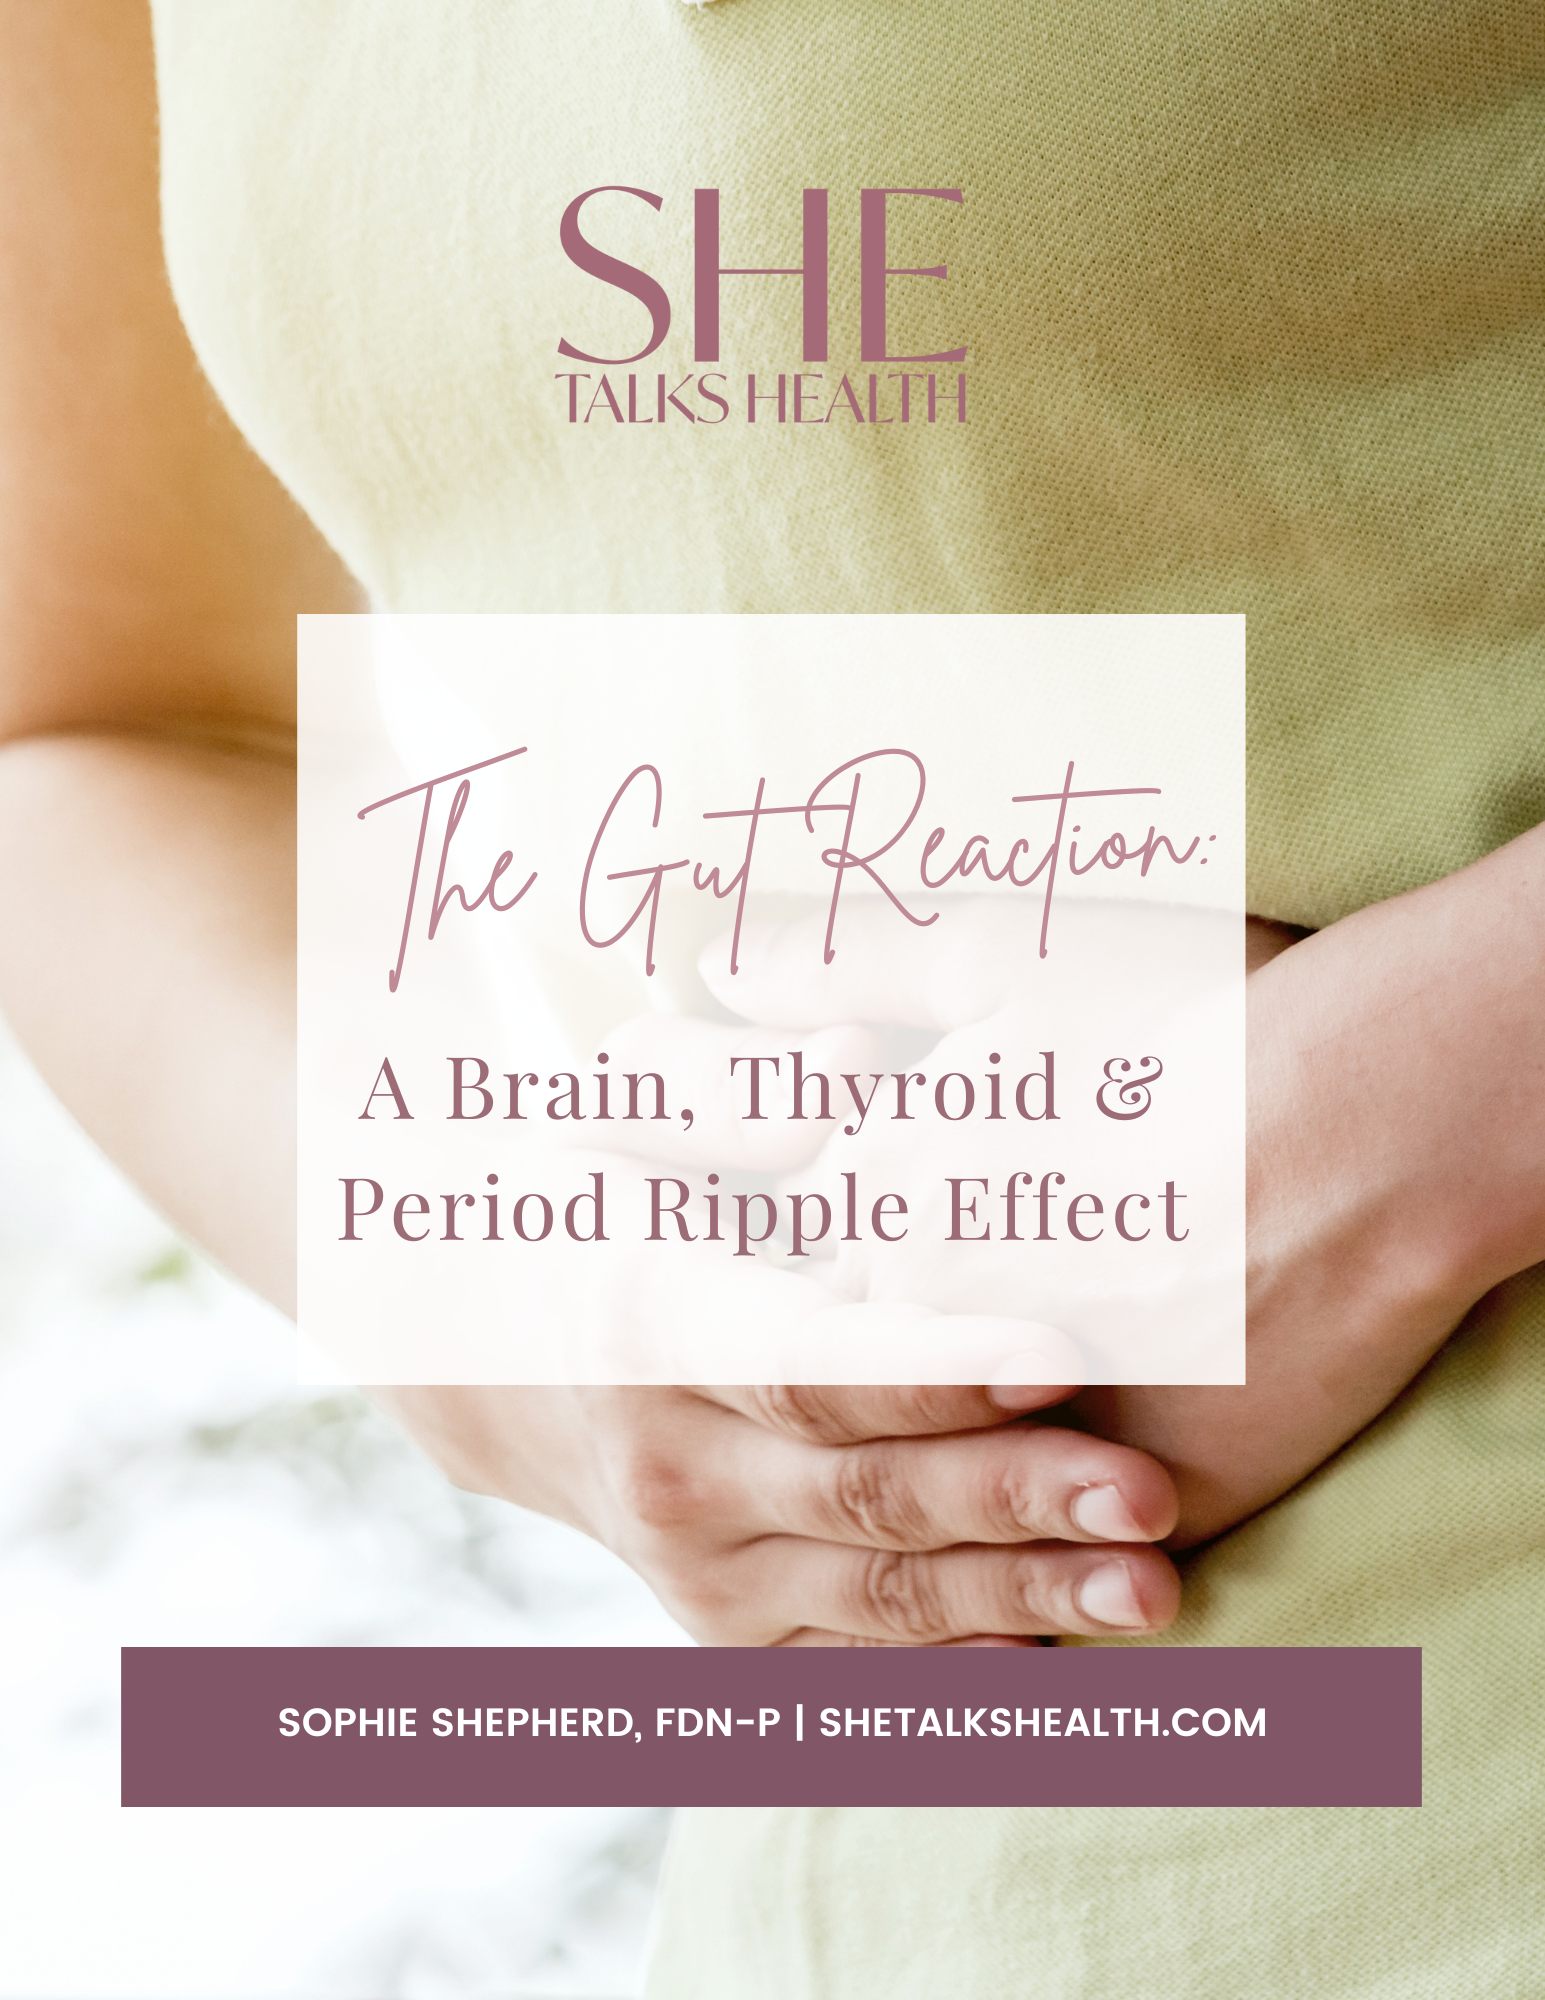 The Gut Reaction: A Brain, Thyroid & Period Ripple Effect